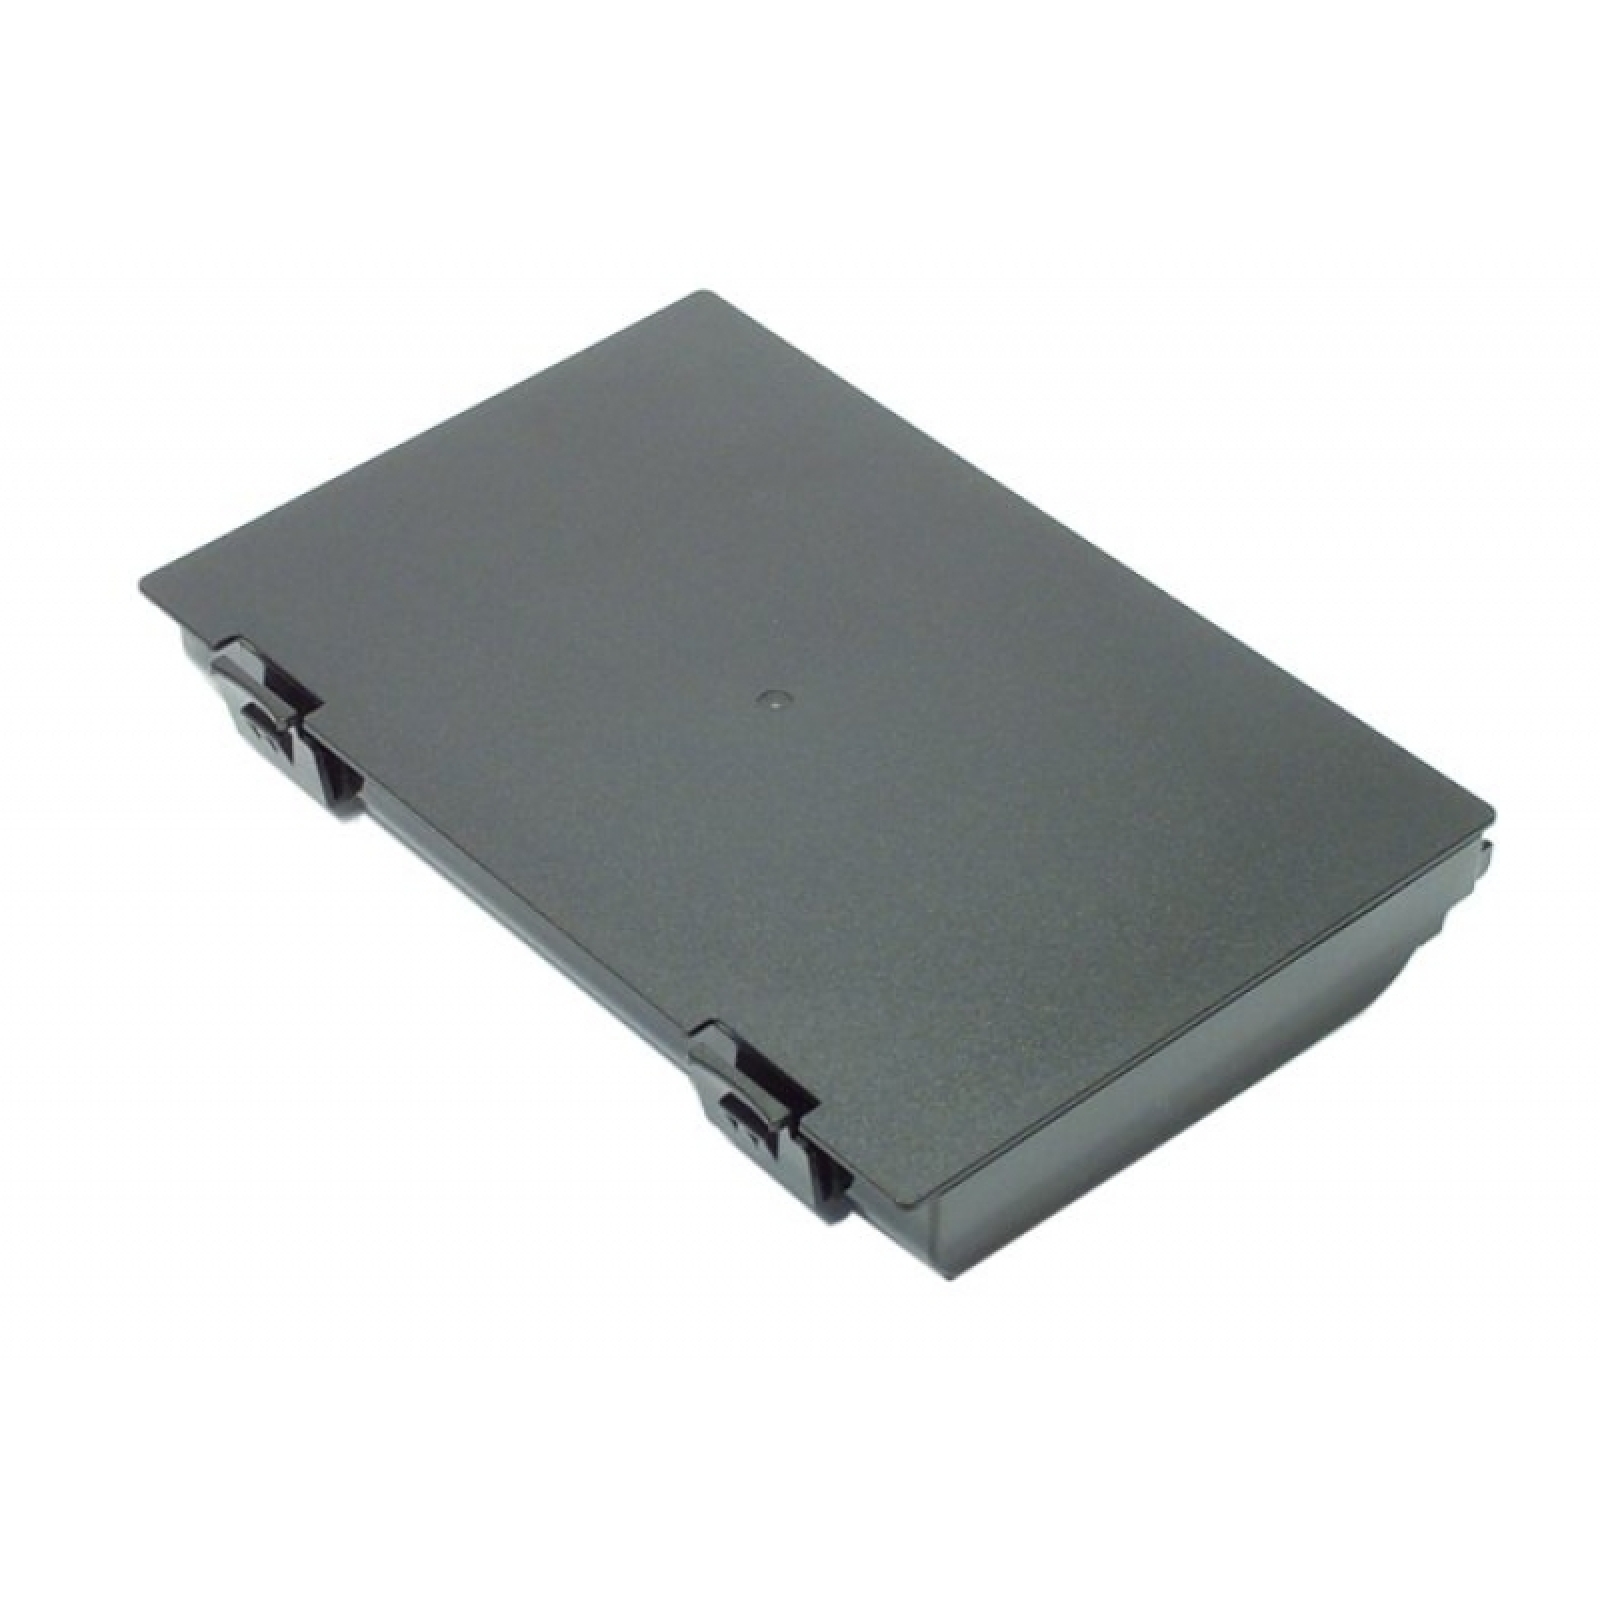 MTXTEC 4400 LiIon, 14.8V, mAh 14.8 FUJITSU E8420 E-8420, für LifeBook (LiIon) Akku Notebook-Akku, Volt, Lithium-Ionen 4400mAh